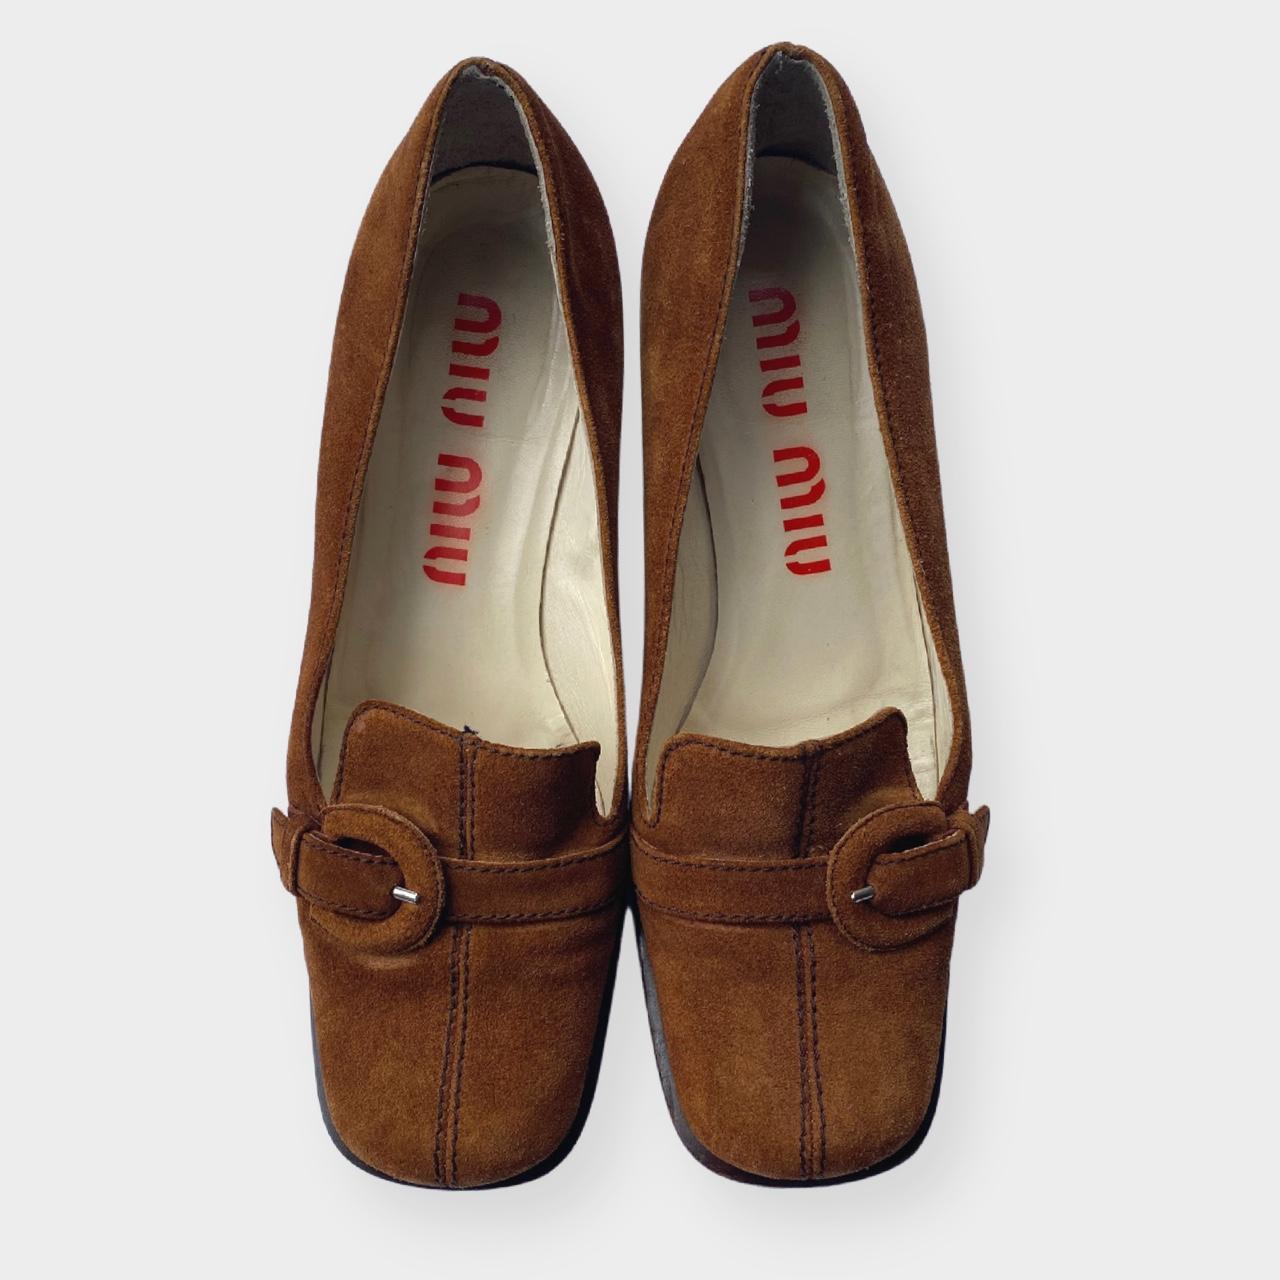 Miu Miu FW 1996 heeled loafers 🤎 Seen in a variation... - Depop